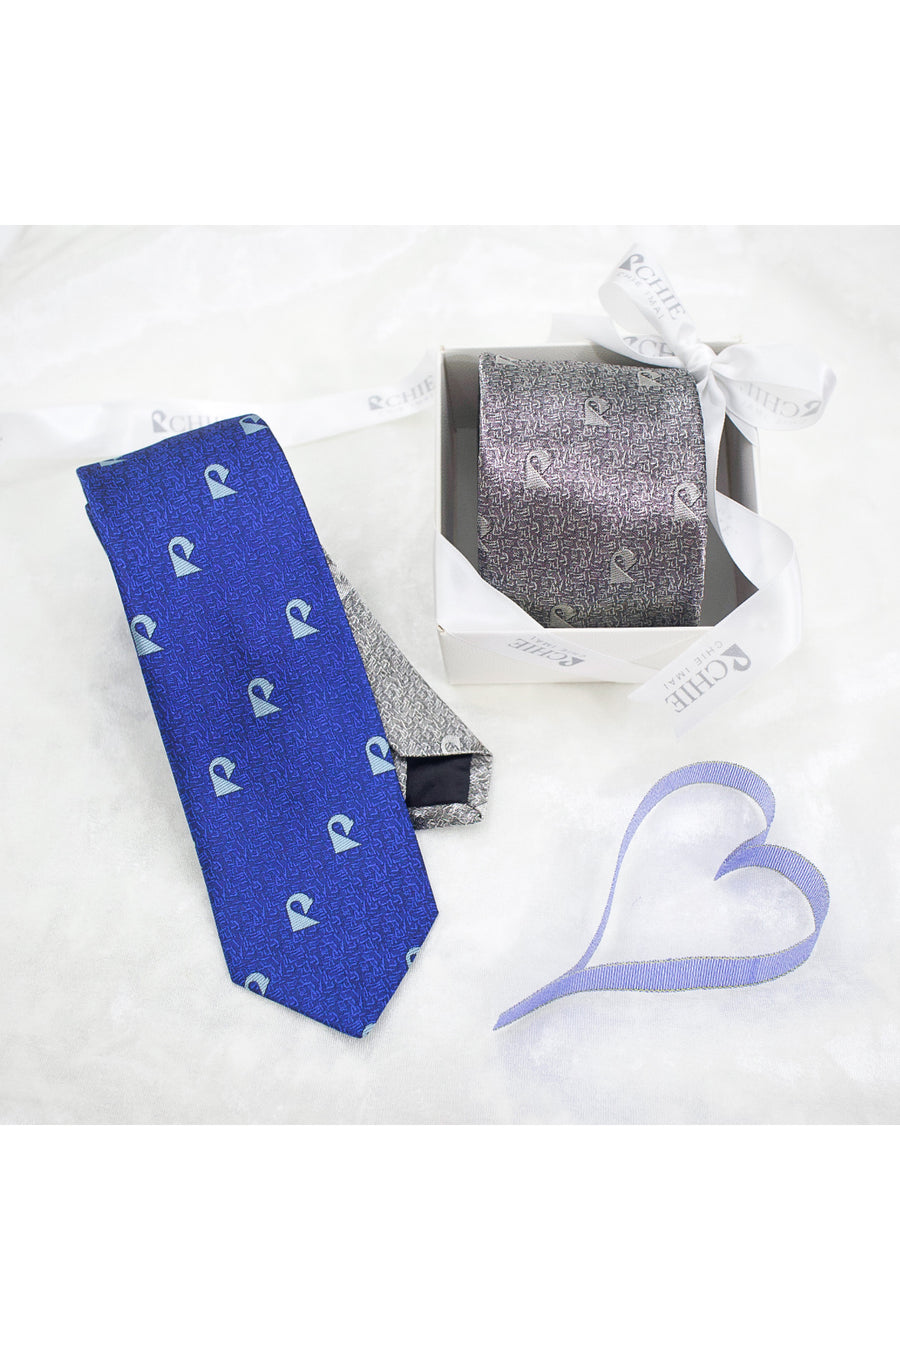 Hakata Weave Silk Tie - Slim Tie CHIE Fox